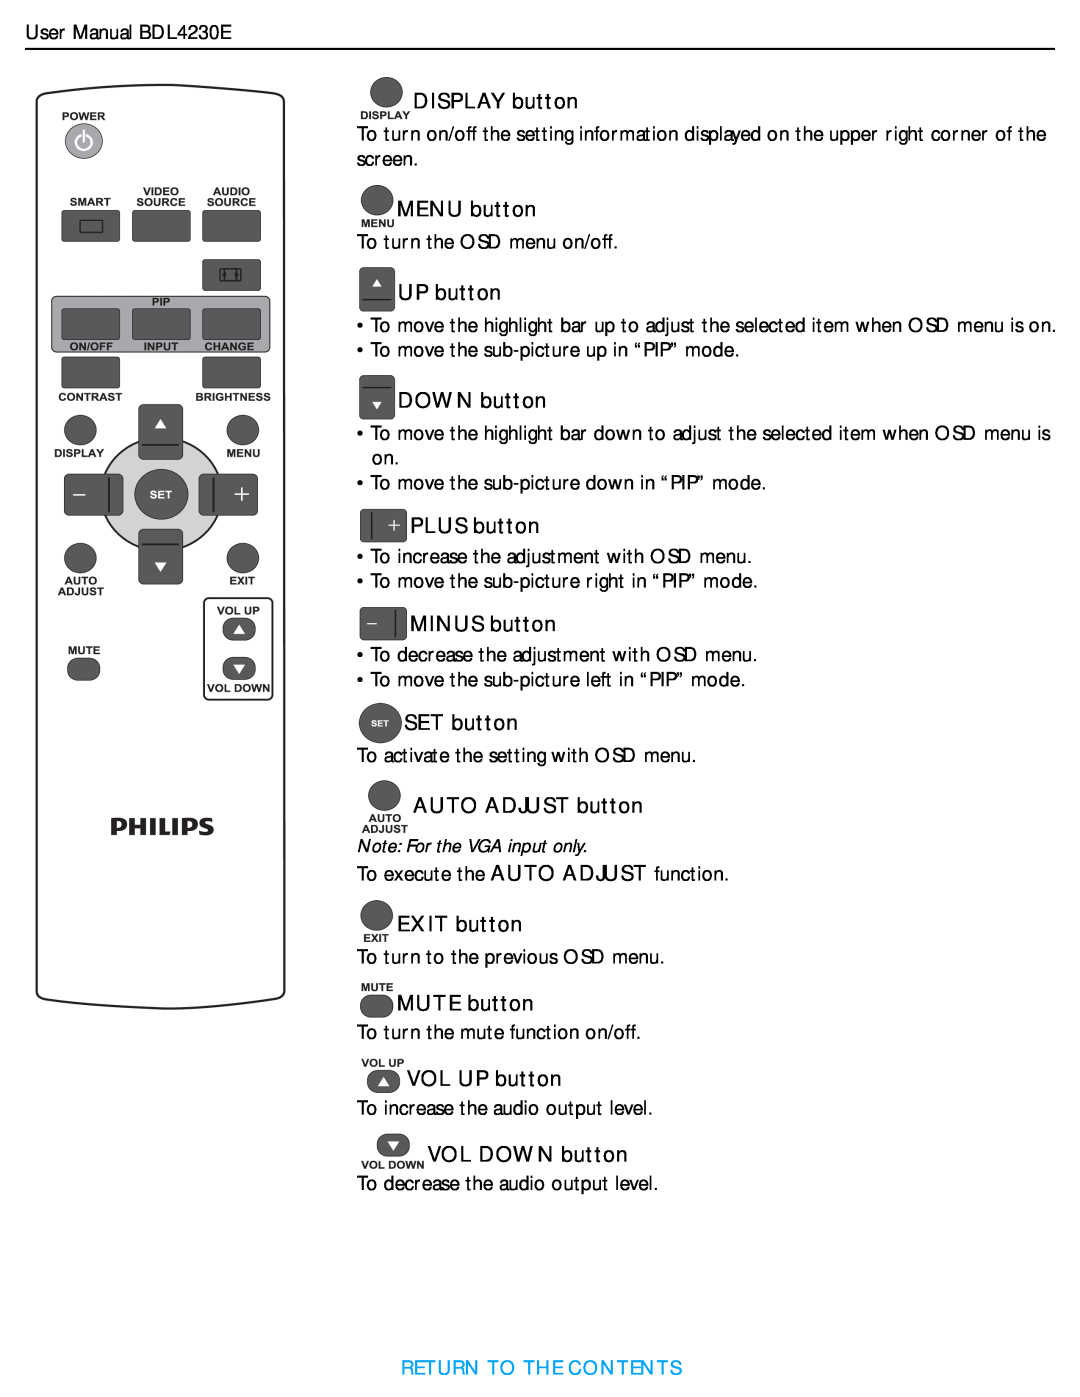 Philips BDL4230E DISPLAY button, MENU button, UP button, DOWN button, PLUS button, MINUS button, SET button, EXIT button 